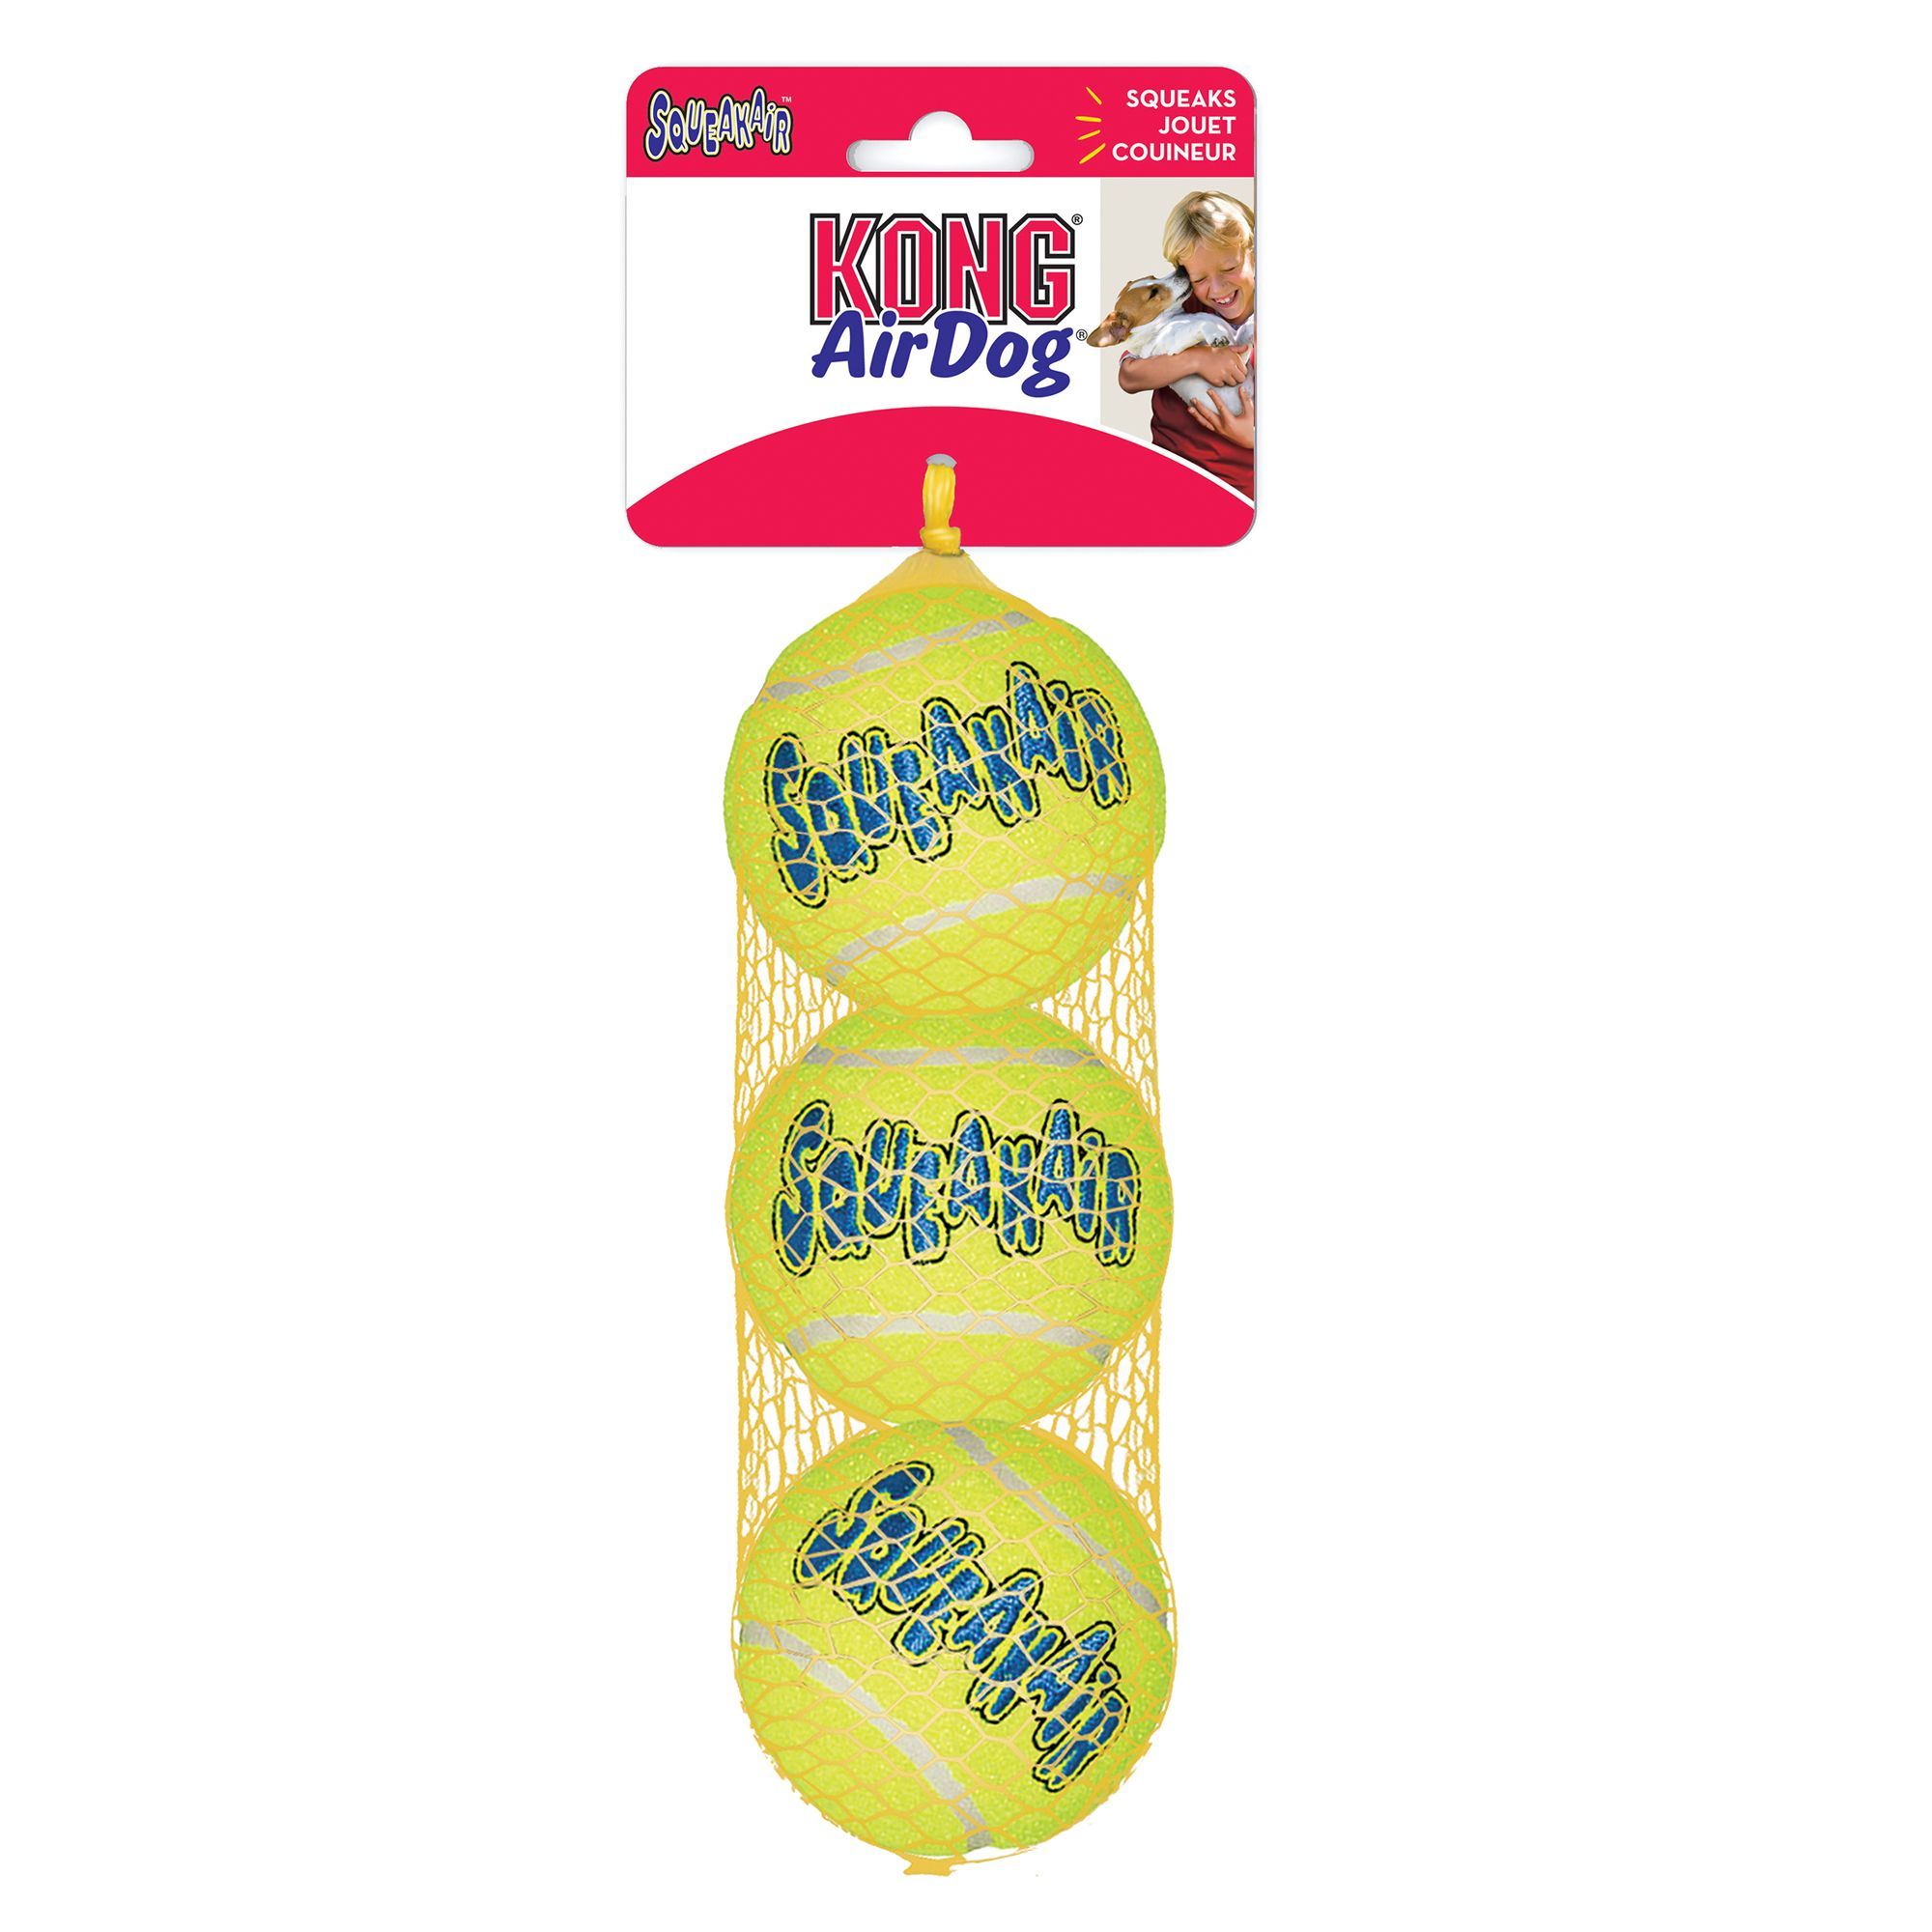 KONG AirDog Squeakair Balls Packs Dog Toy 3pk Medium - Mutts & Co.